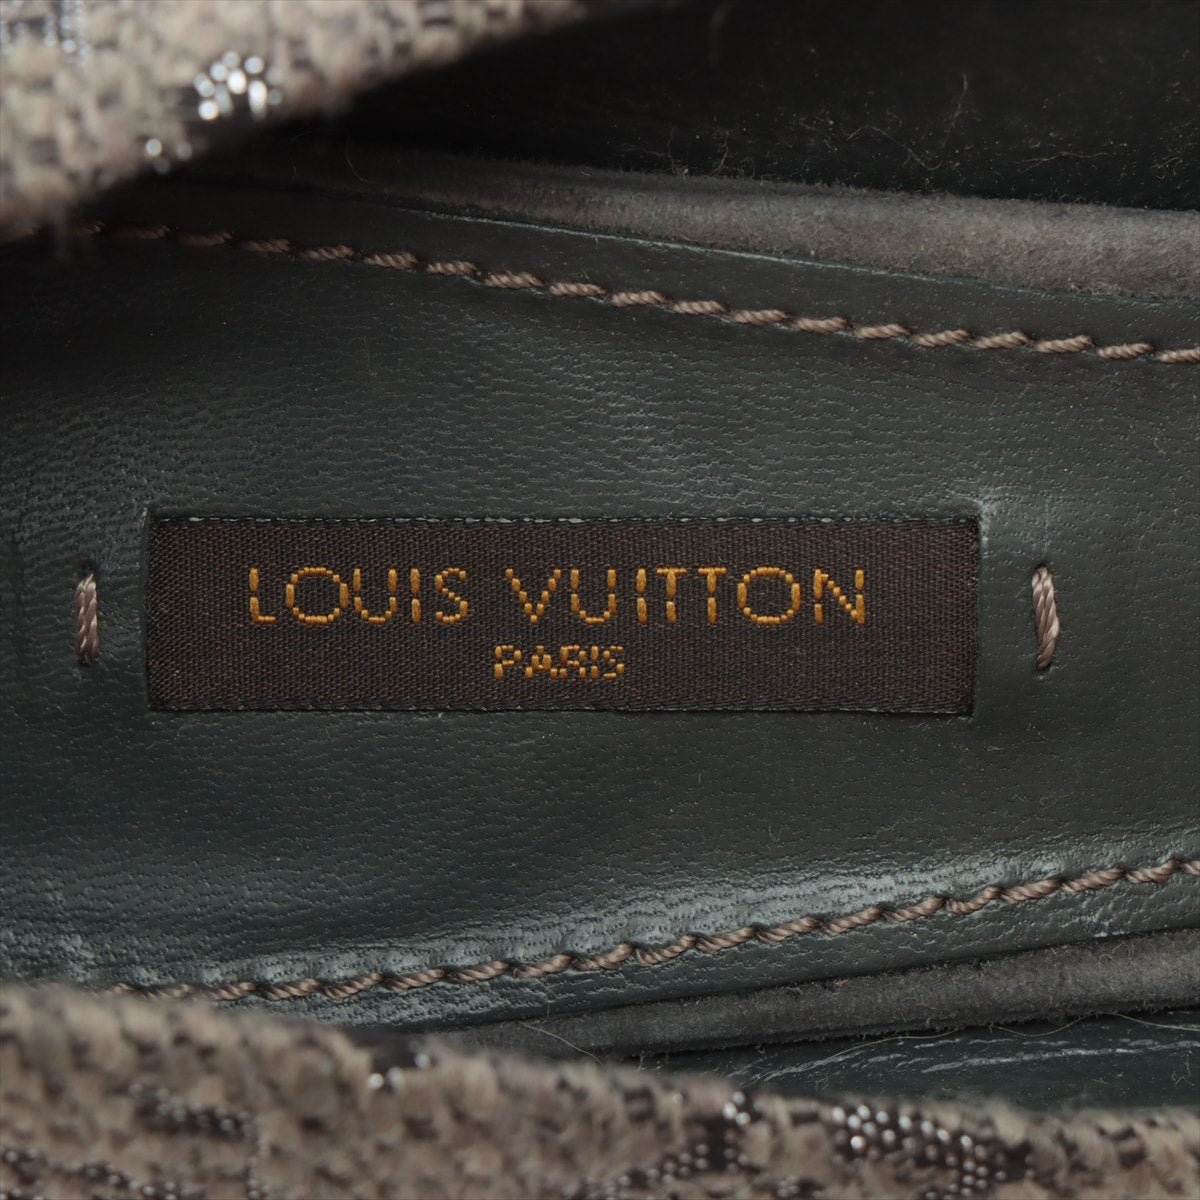 Louis Vuitton Twid Pump 38 1/2  Grey TC0153 Lift